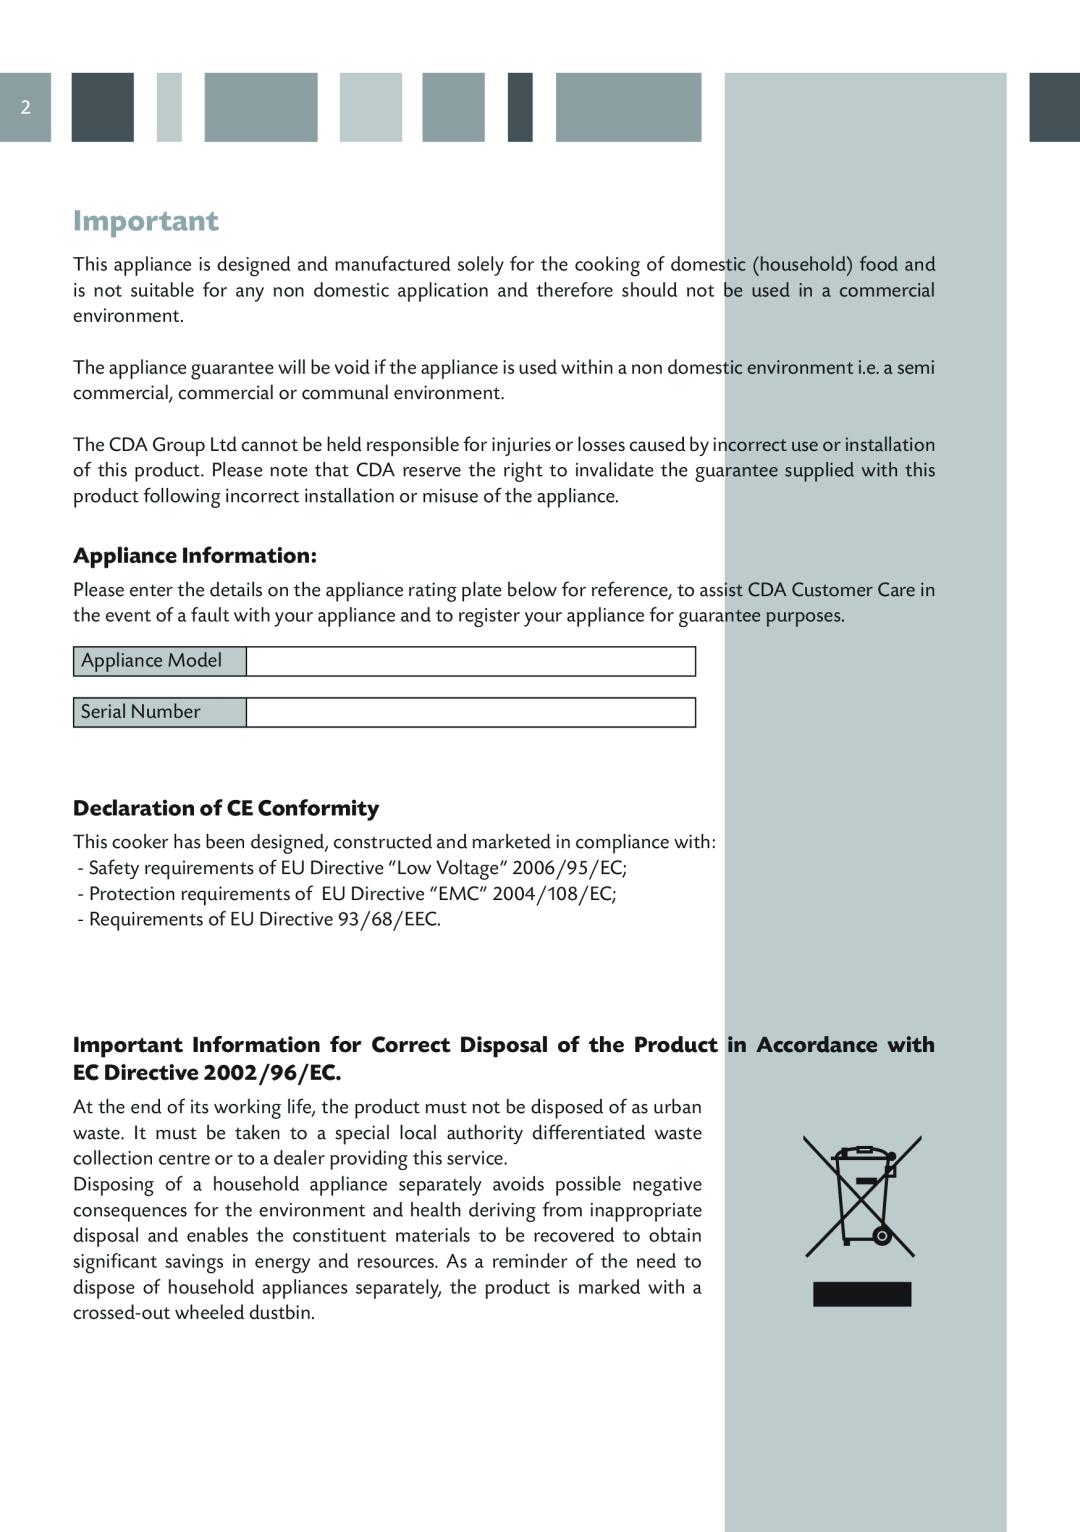 CDA RV 1060 manual Appliance Information, Declaration of CE Conformity 